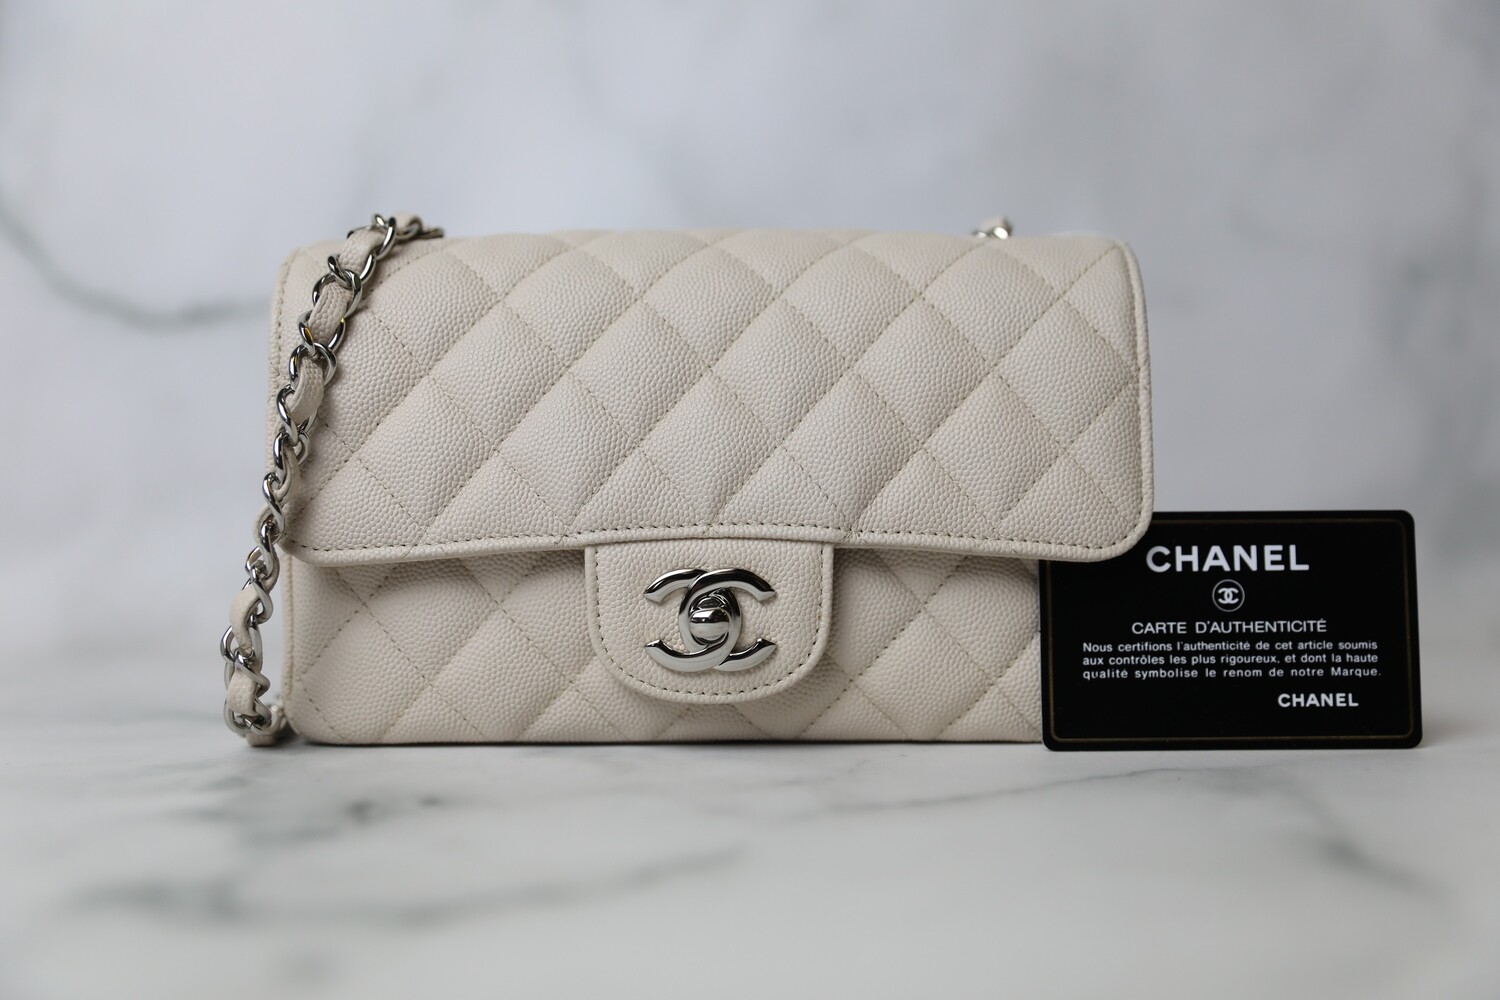 Chanel Double Flap Medium Replica Bag Review (Caviar Pearl Green